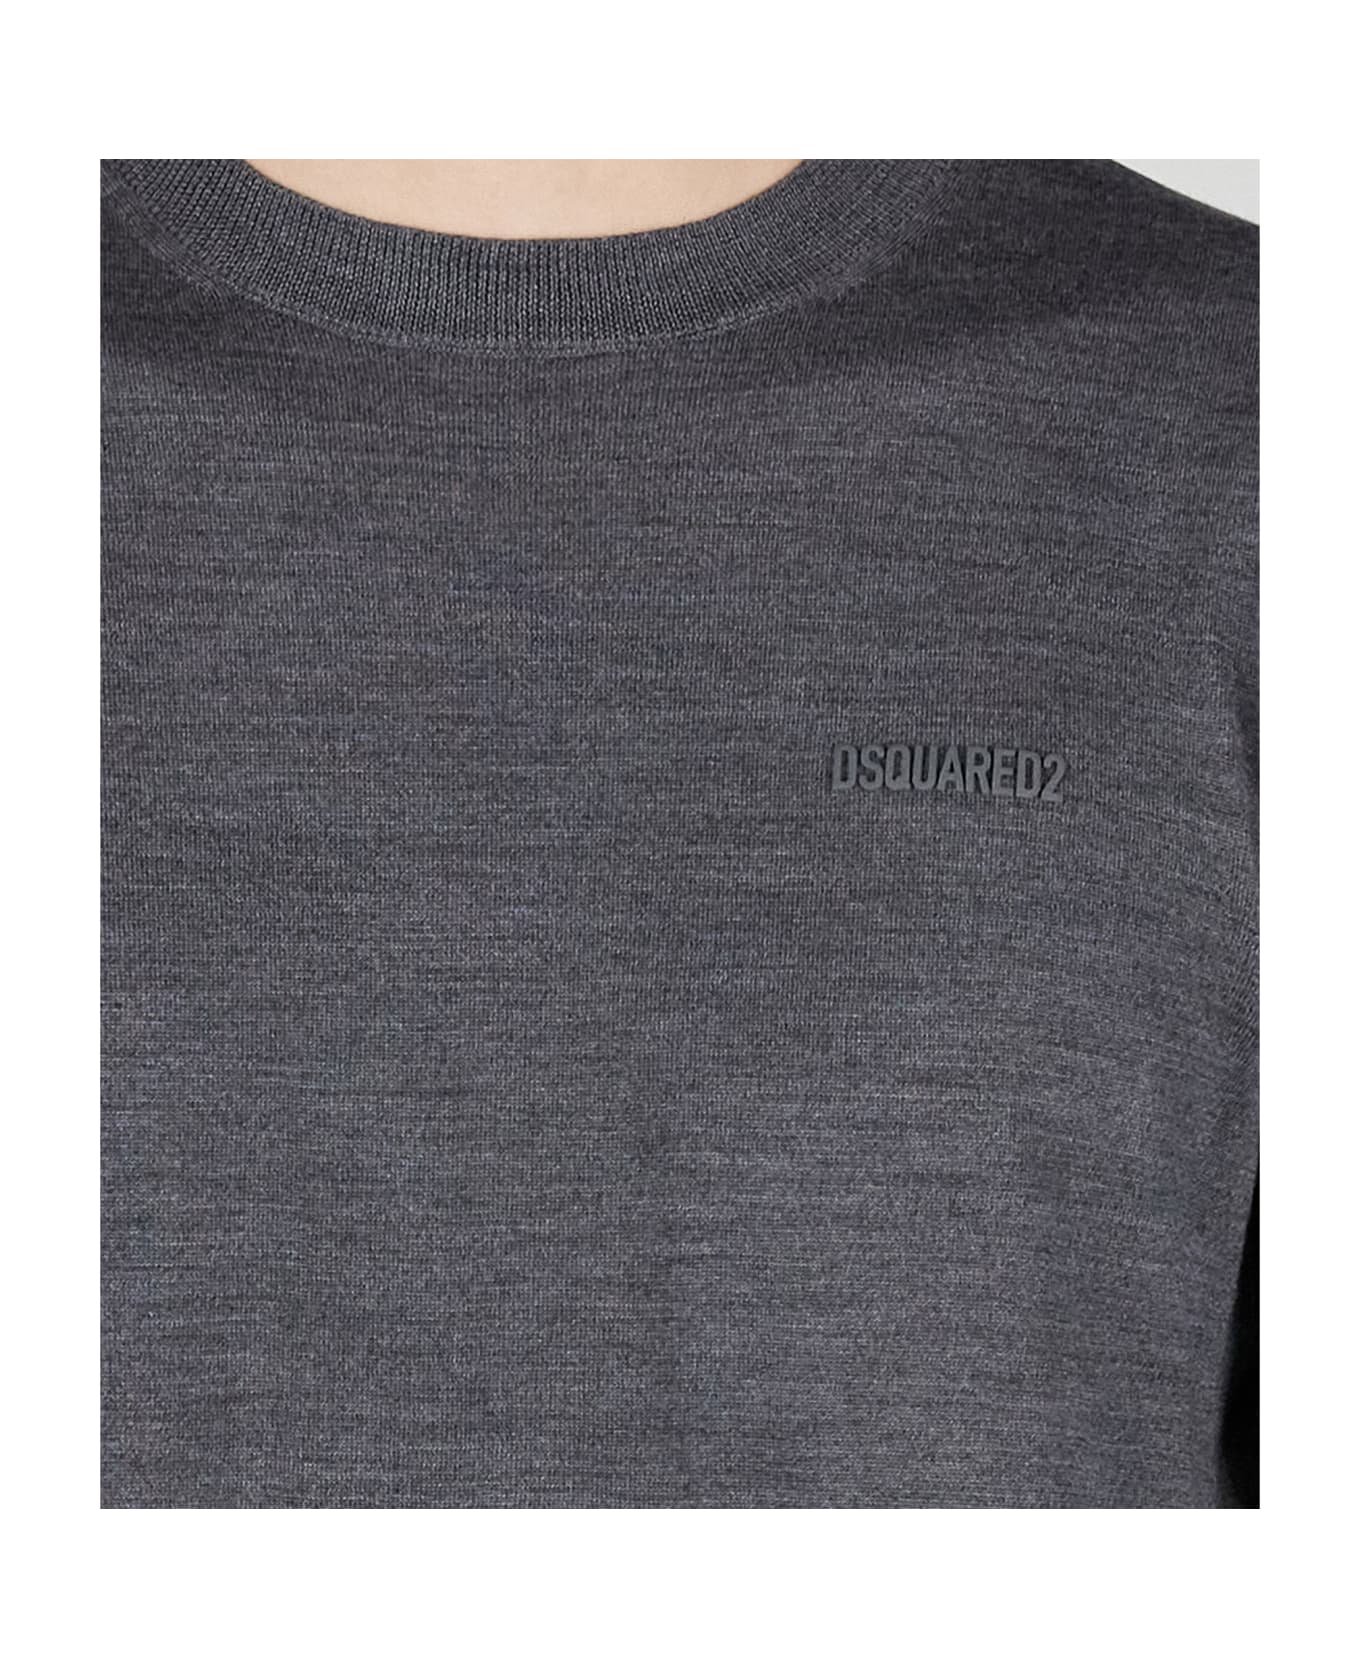 Dsquared2 Knitwear - Grey melange